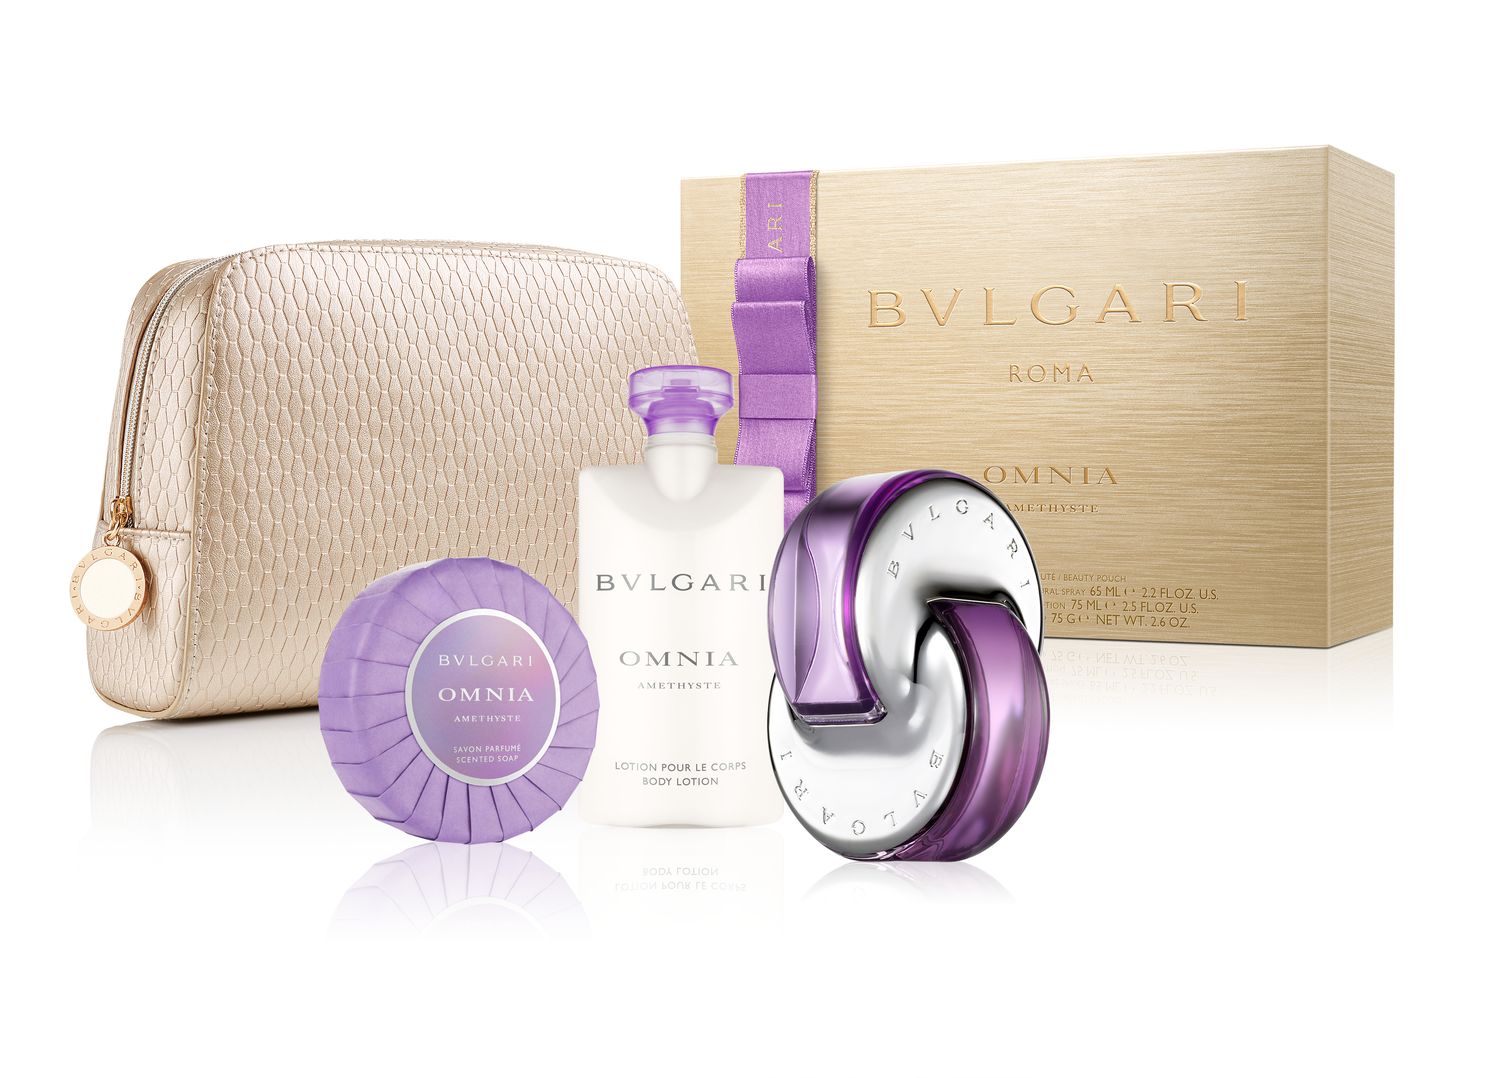 BVLGARI 寶格麗 紫水晶奢華禮盒 (香水65ml+身體乳75ml+香氛肥皂75g+化妝包)